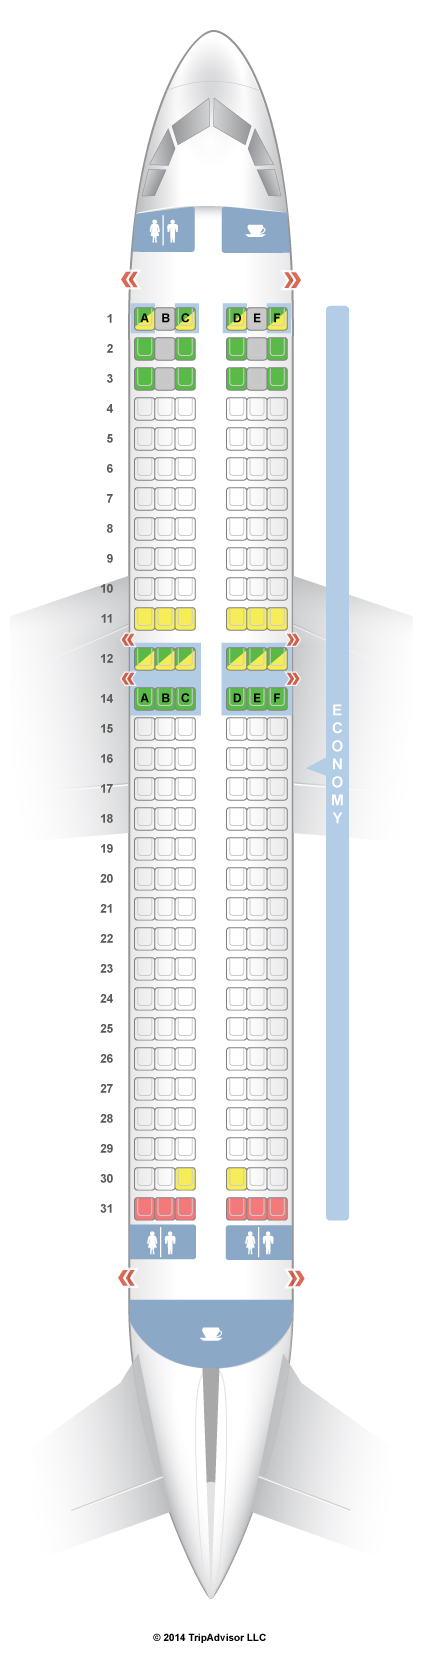 Norwegian Airlines Seating Chart